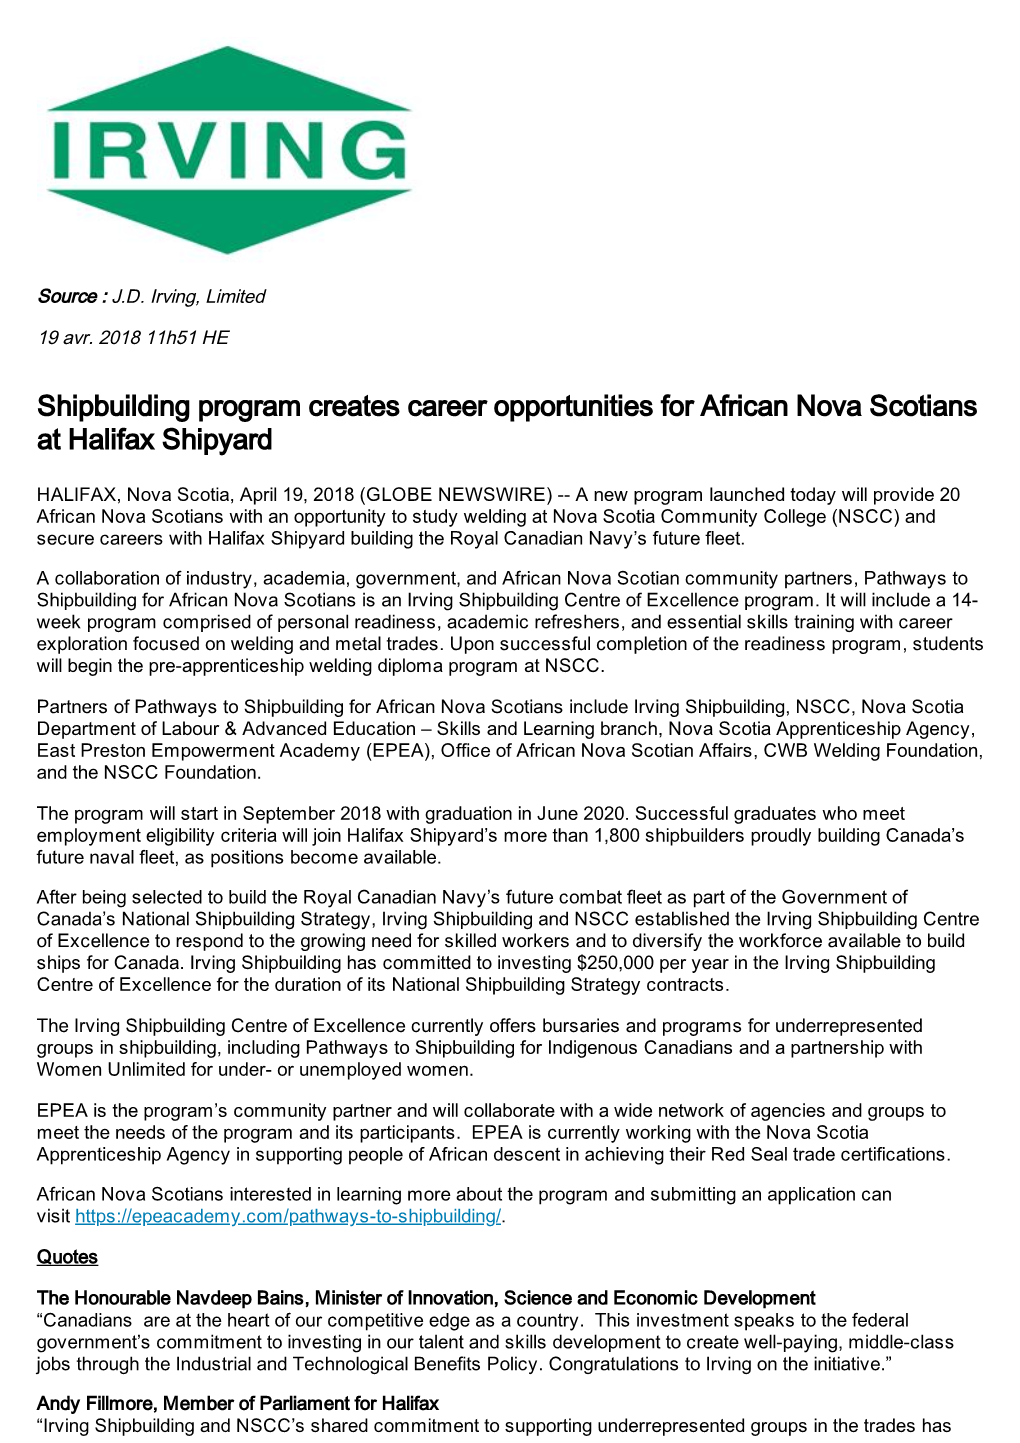 Shipbuilding Program Creates Career Opportunities for African Nova Scotians at Halifax Shipyard